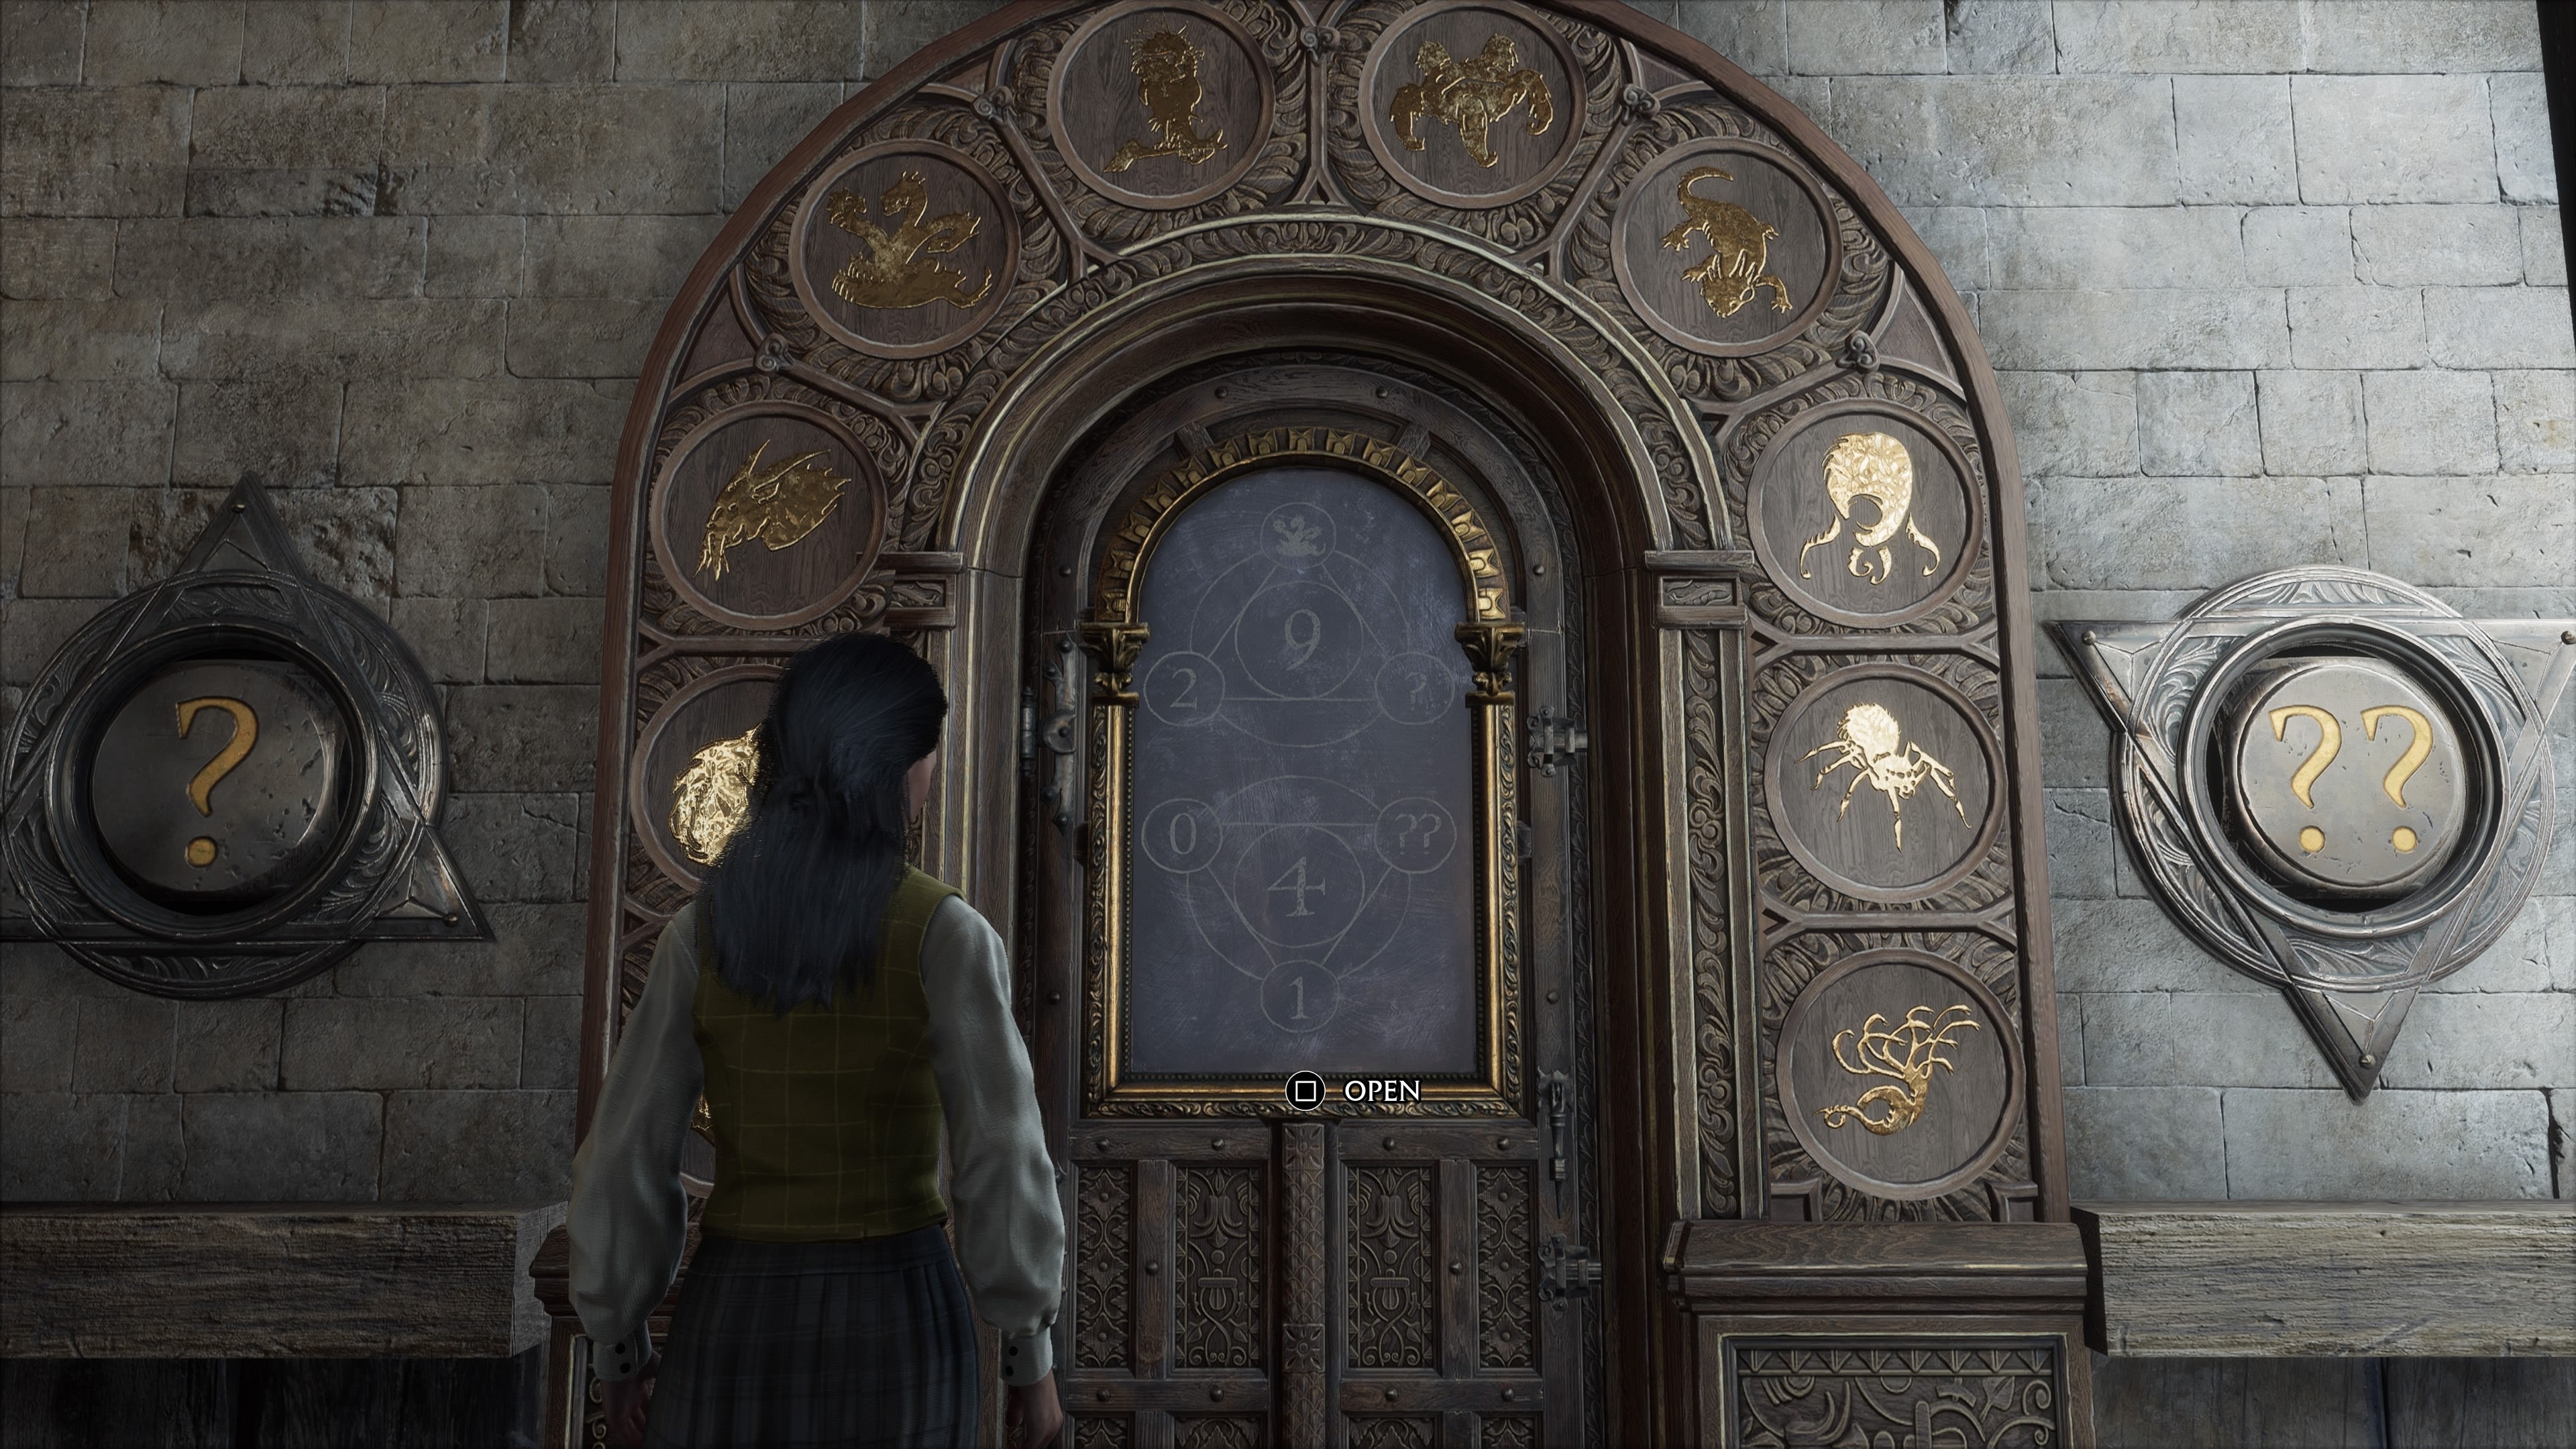 Hogwarts Legacy door puzzles: How to solve the symbol doors